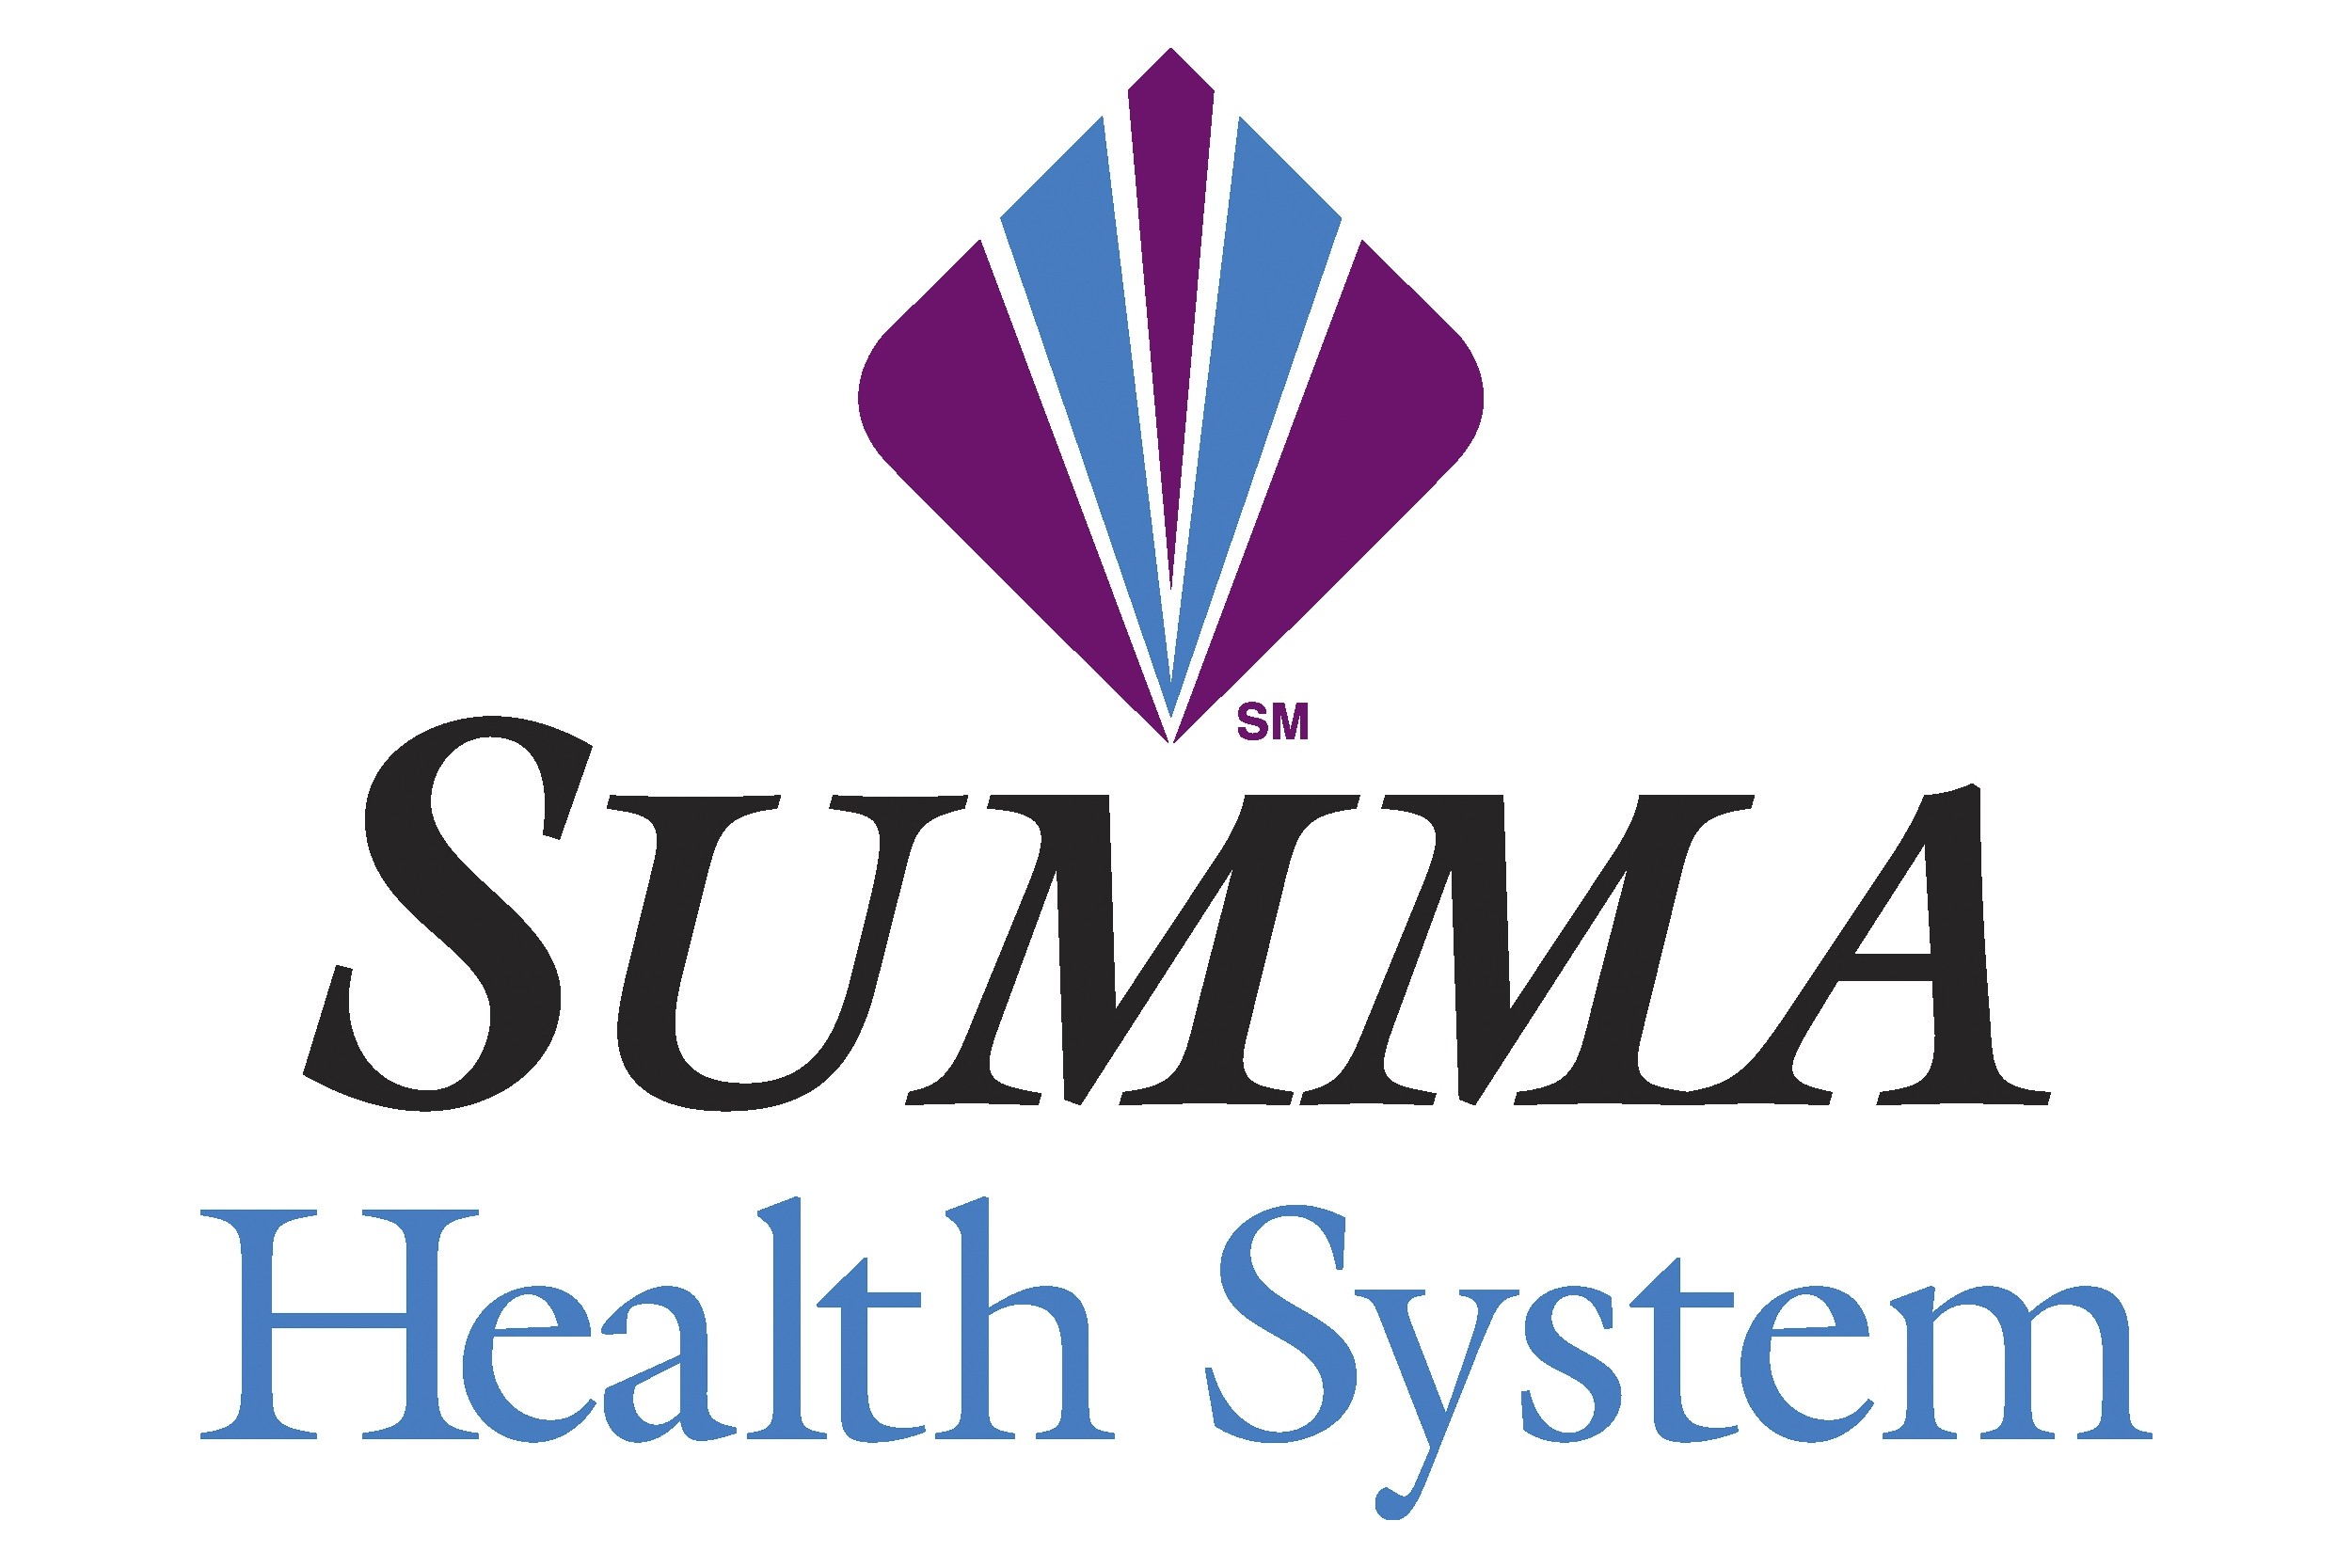 Summa Health System